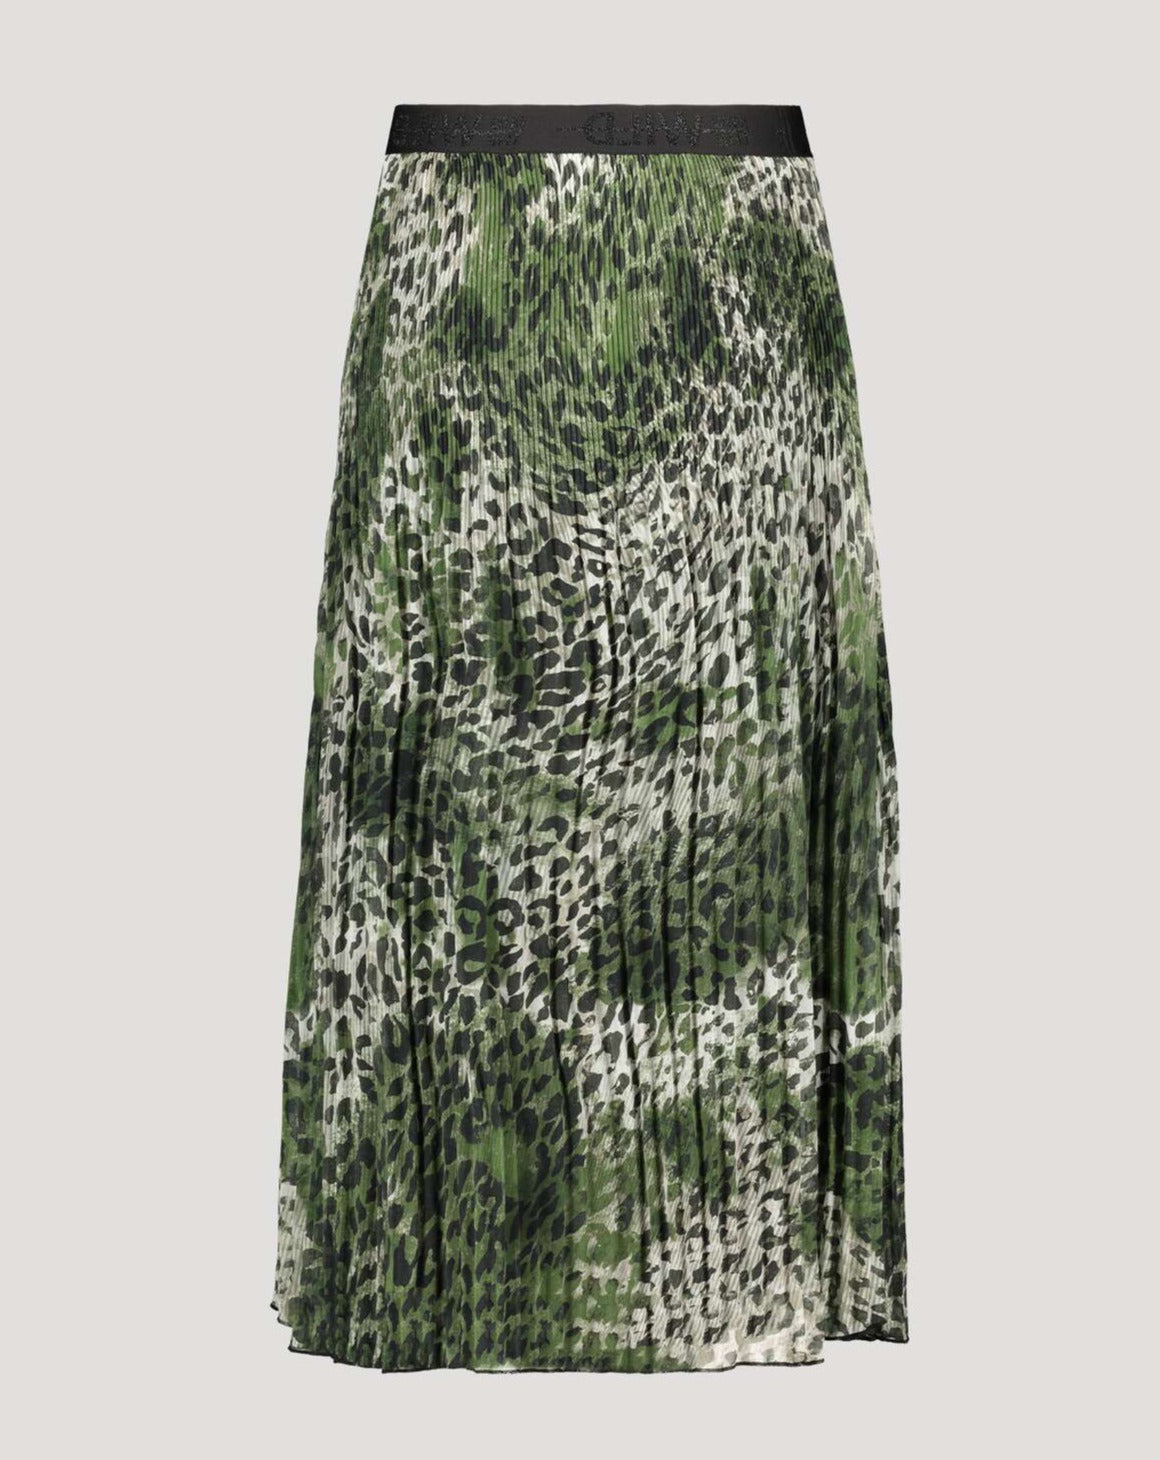 Monari Pleated Skirt - Green and Black Leo Print